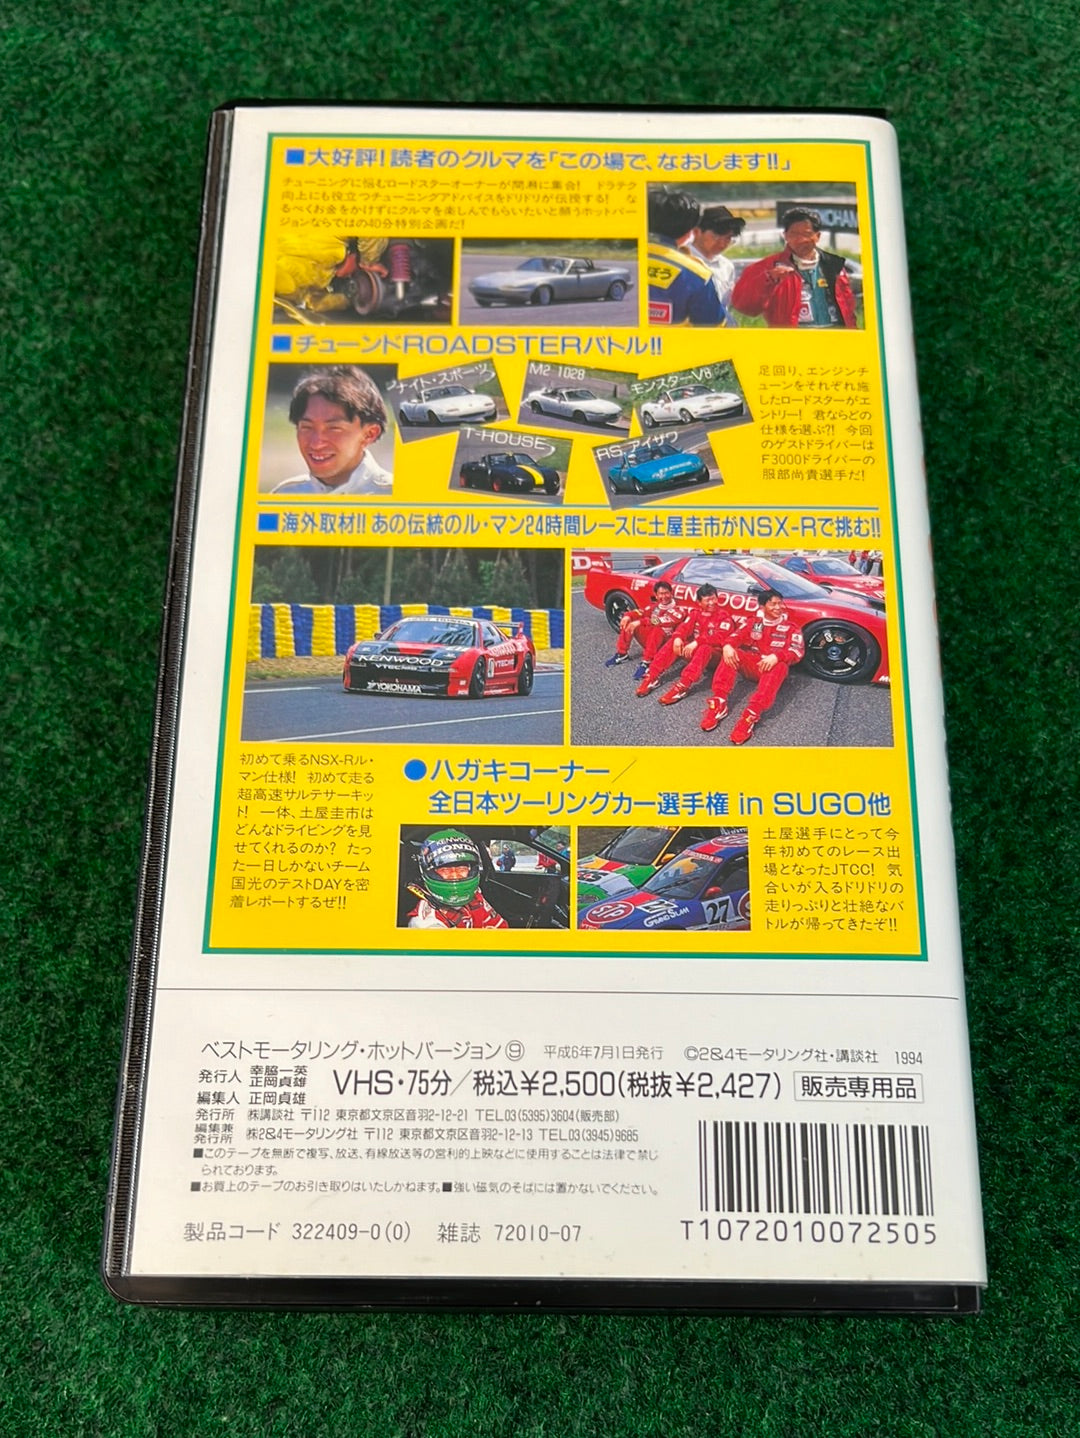 Hot Version VHS - Vol. 9